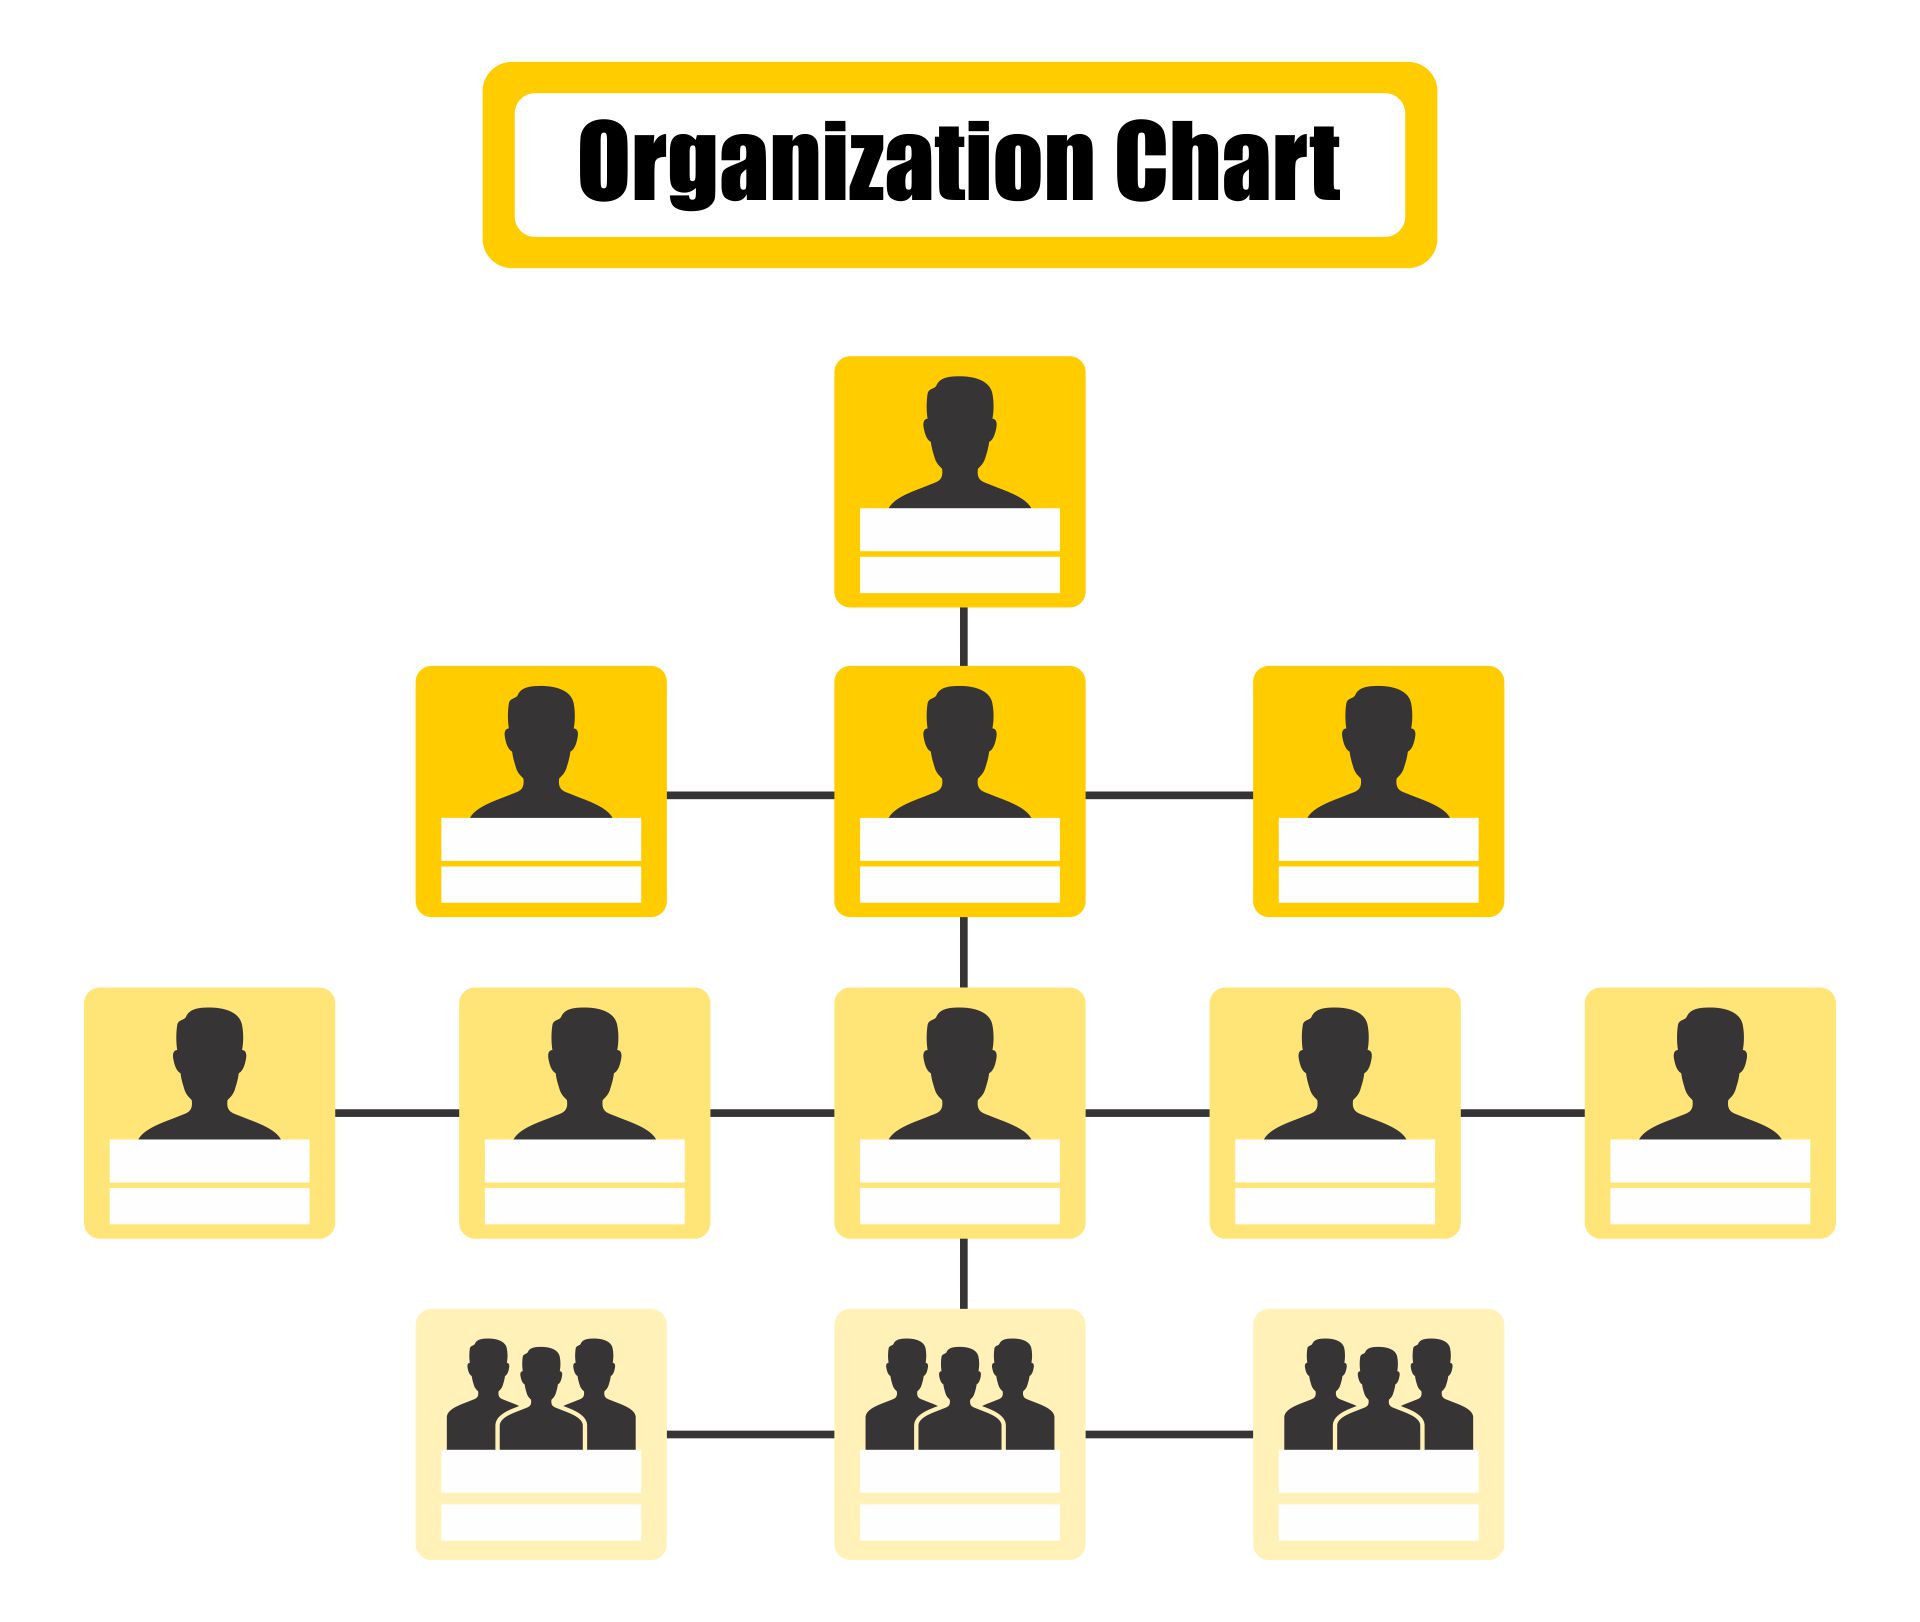 Organizational Structure Chart Template Free Image to u